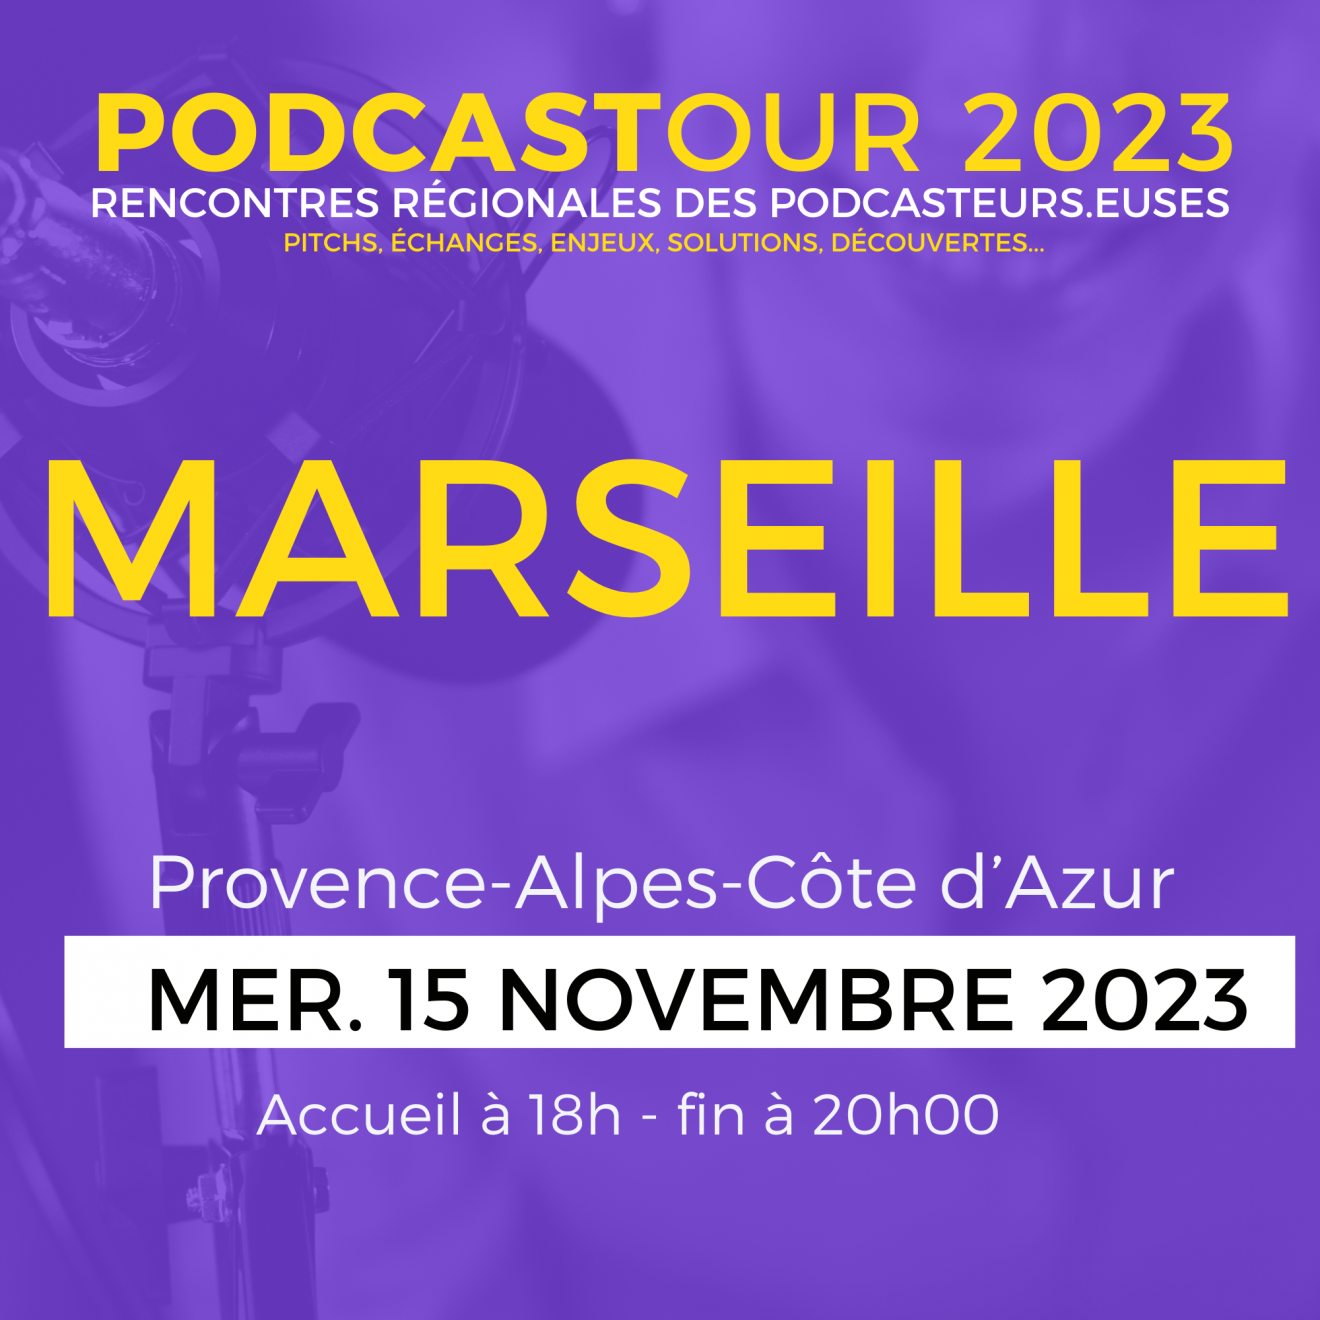 PodcasTour Marseille